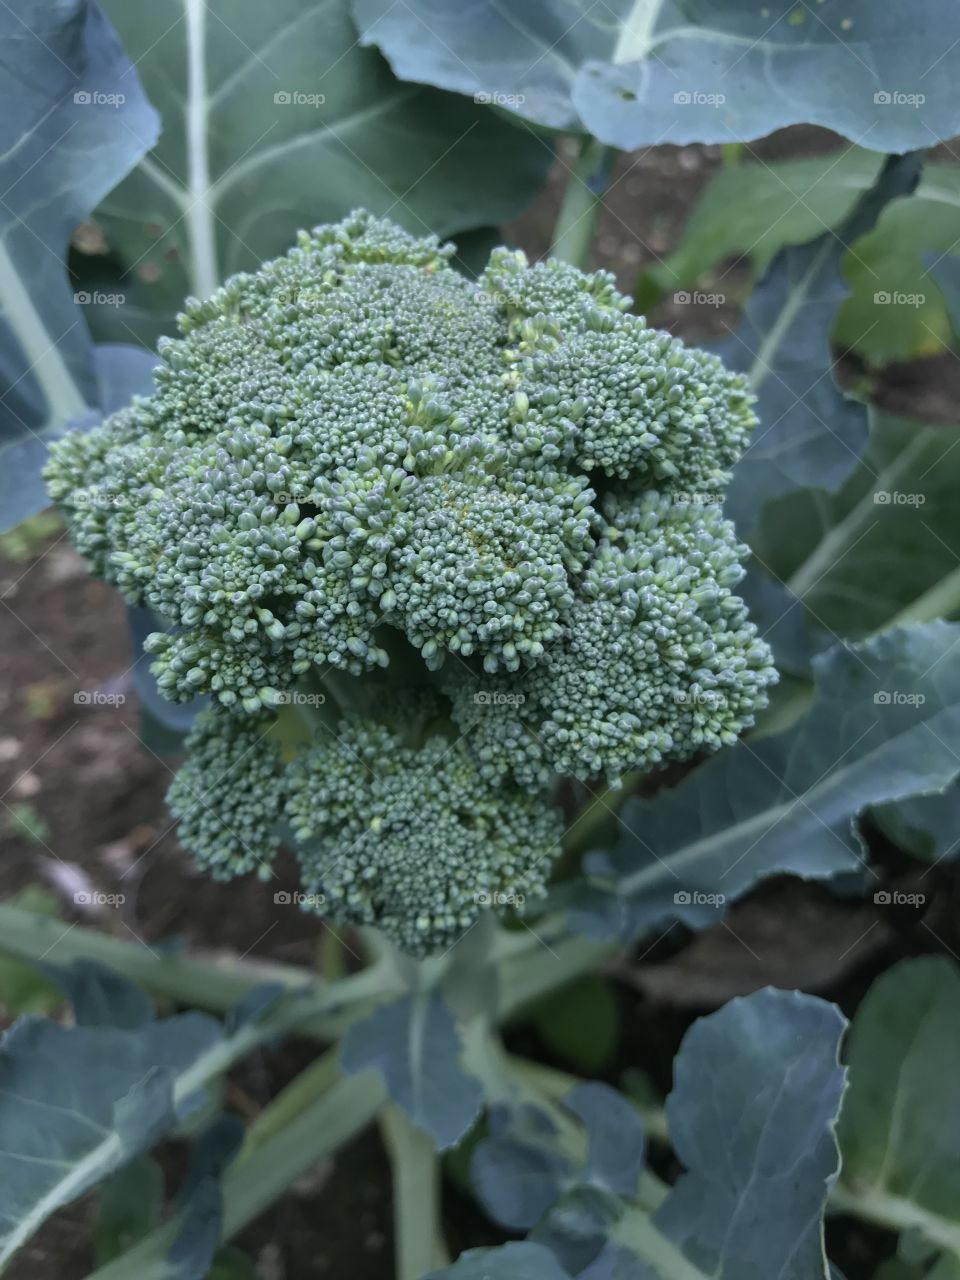 broccoli!